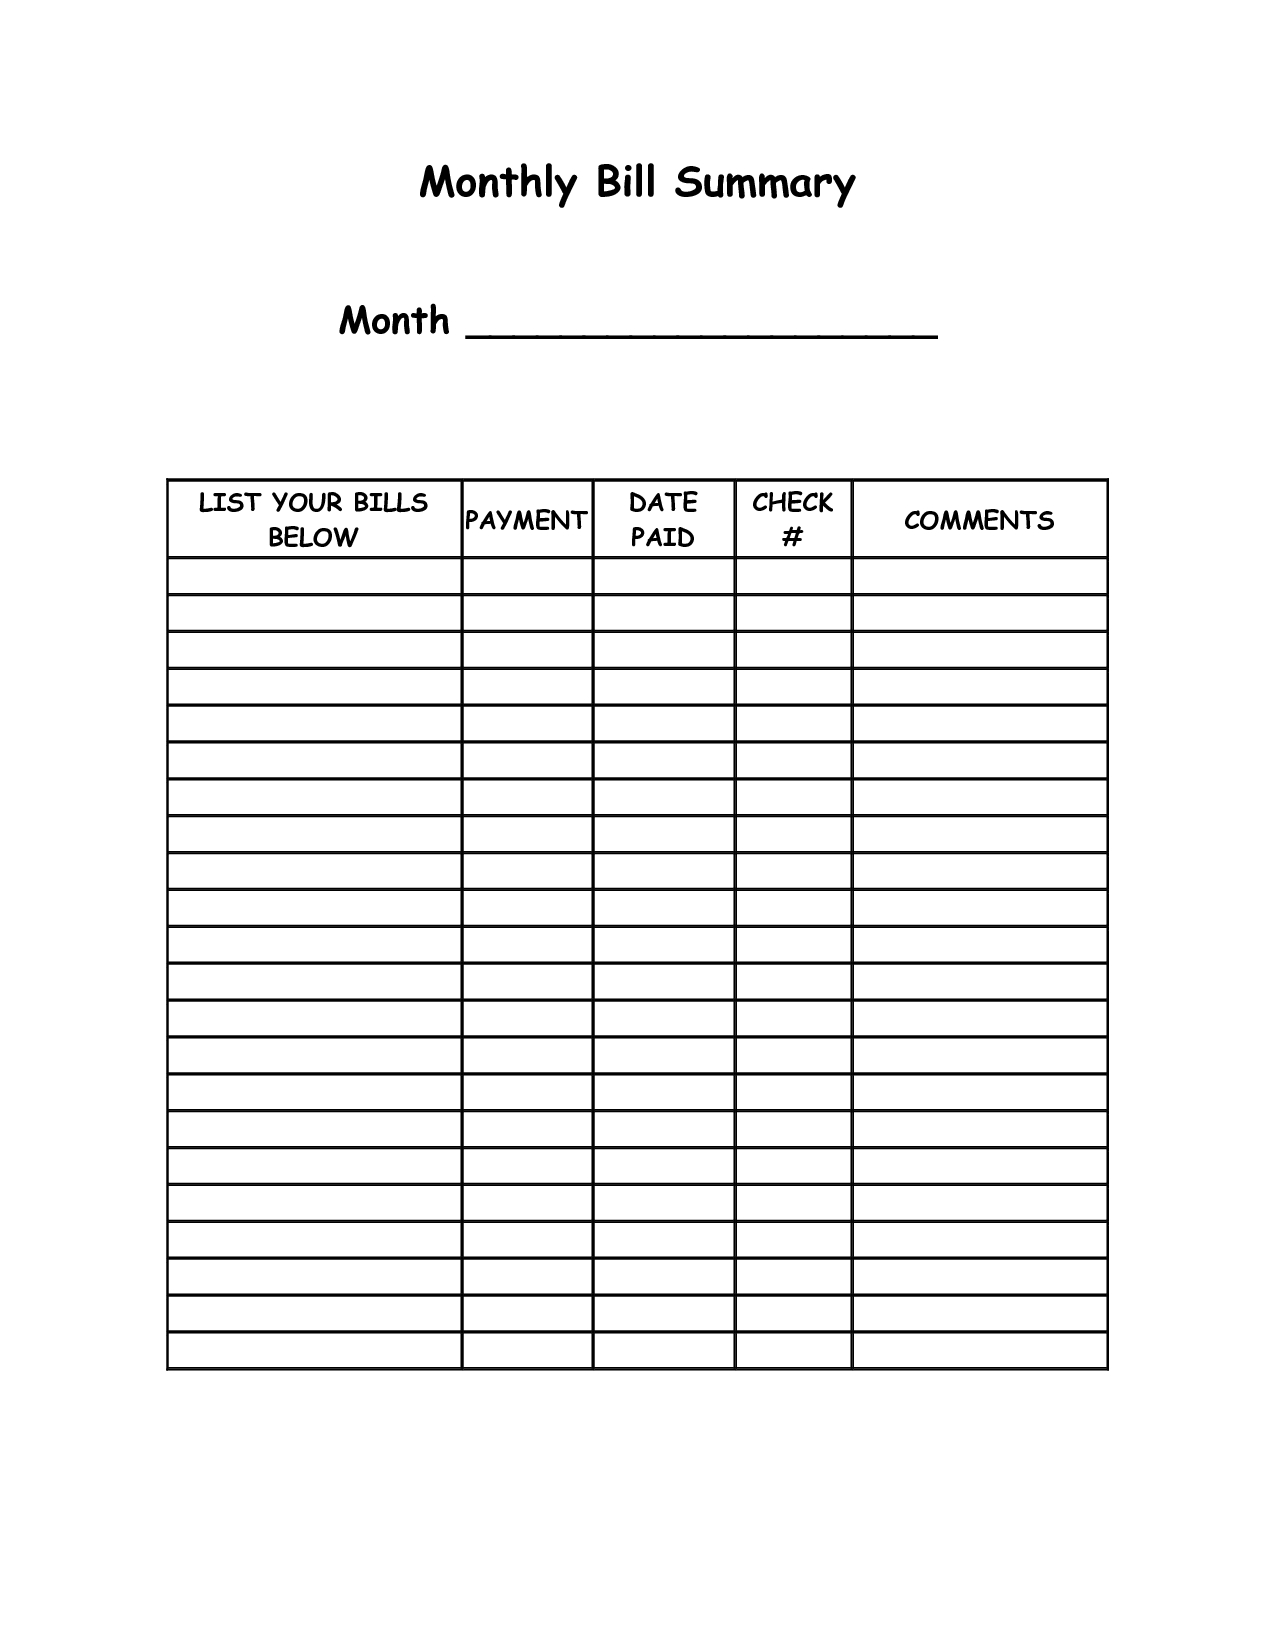 Monthly Bill Summary Doc | Organization | Bill Payment Organization within Blank Monthly Bill Organizer Printable